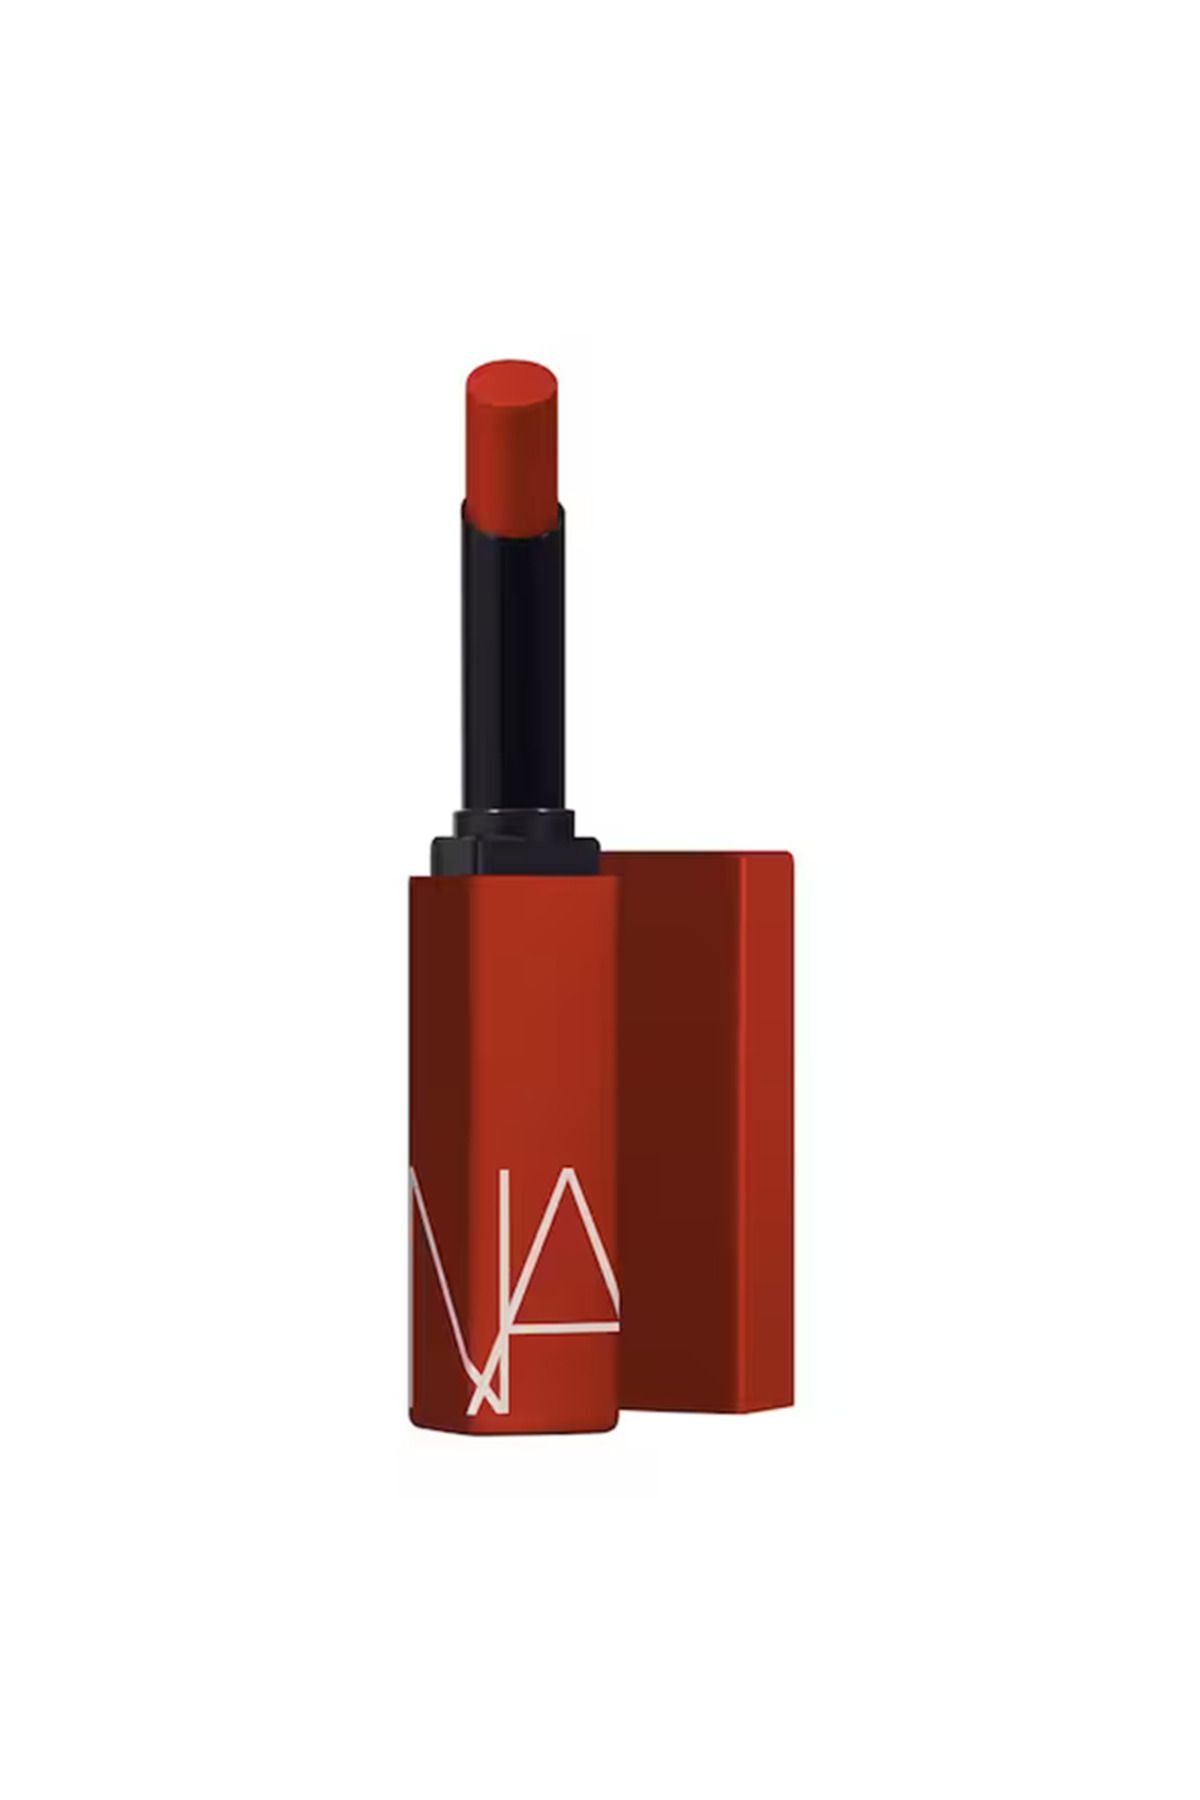 Nars - Mat Ruj - Powermatte Lipstick - Too Hot To Hold 1.5 g